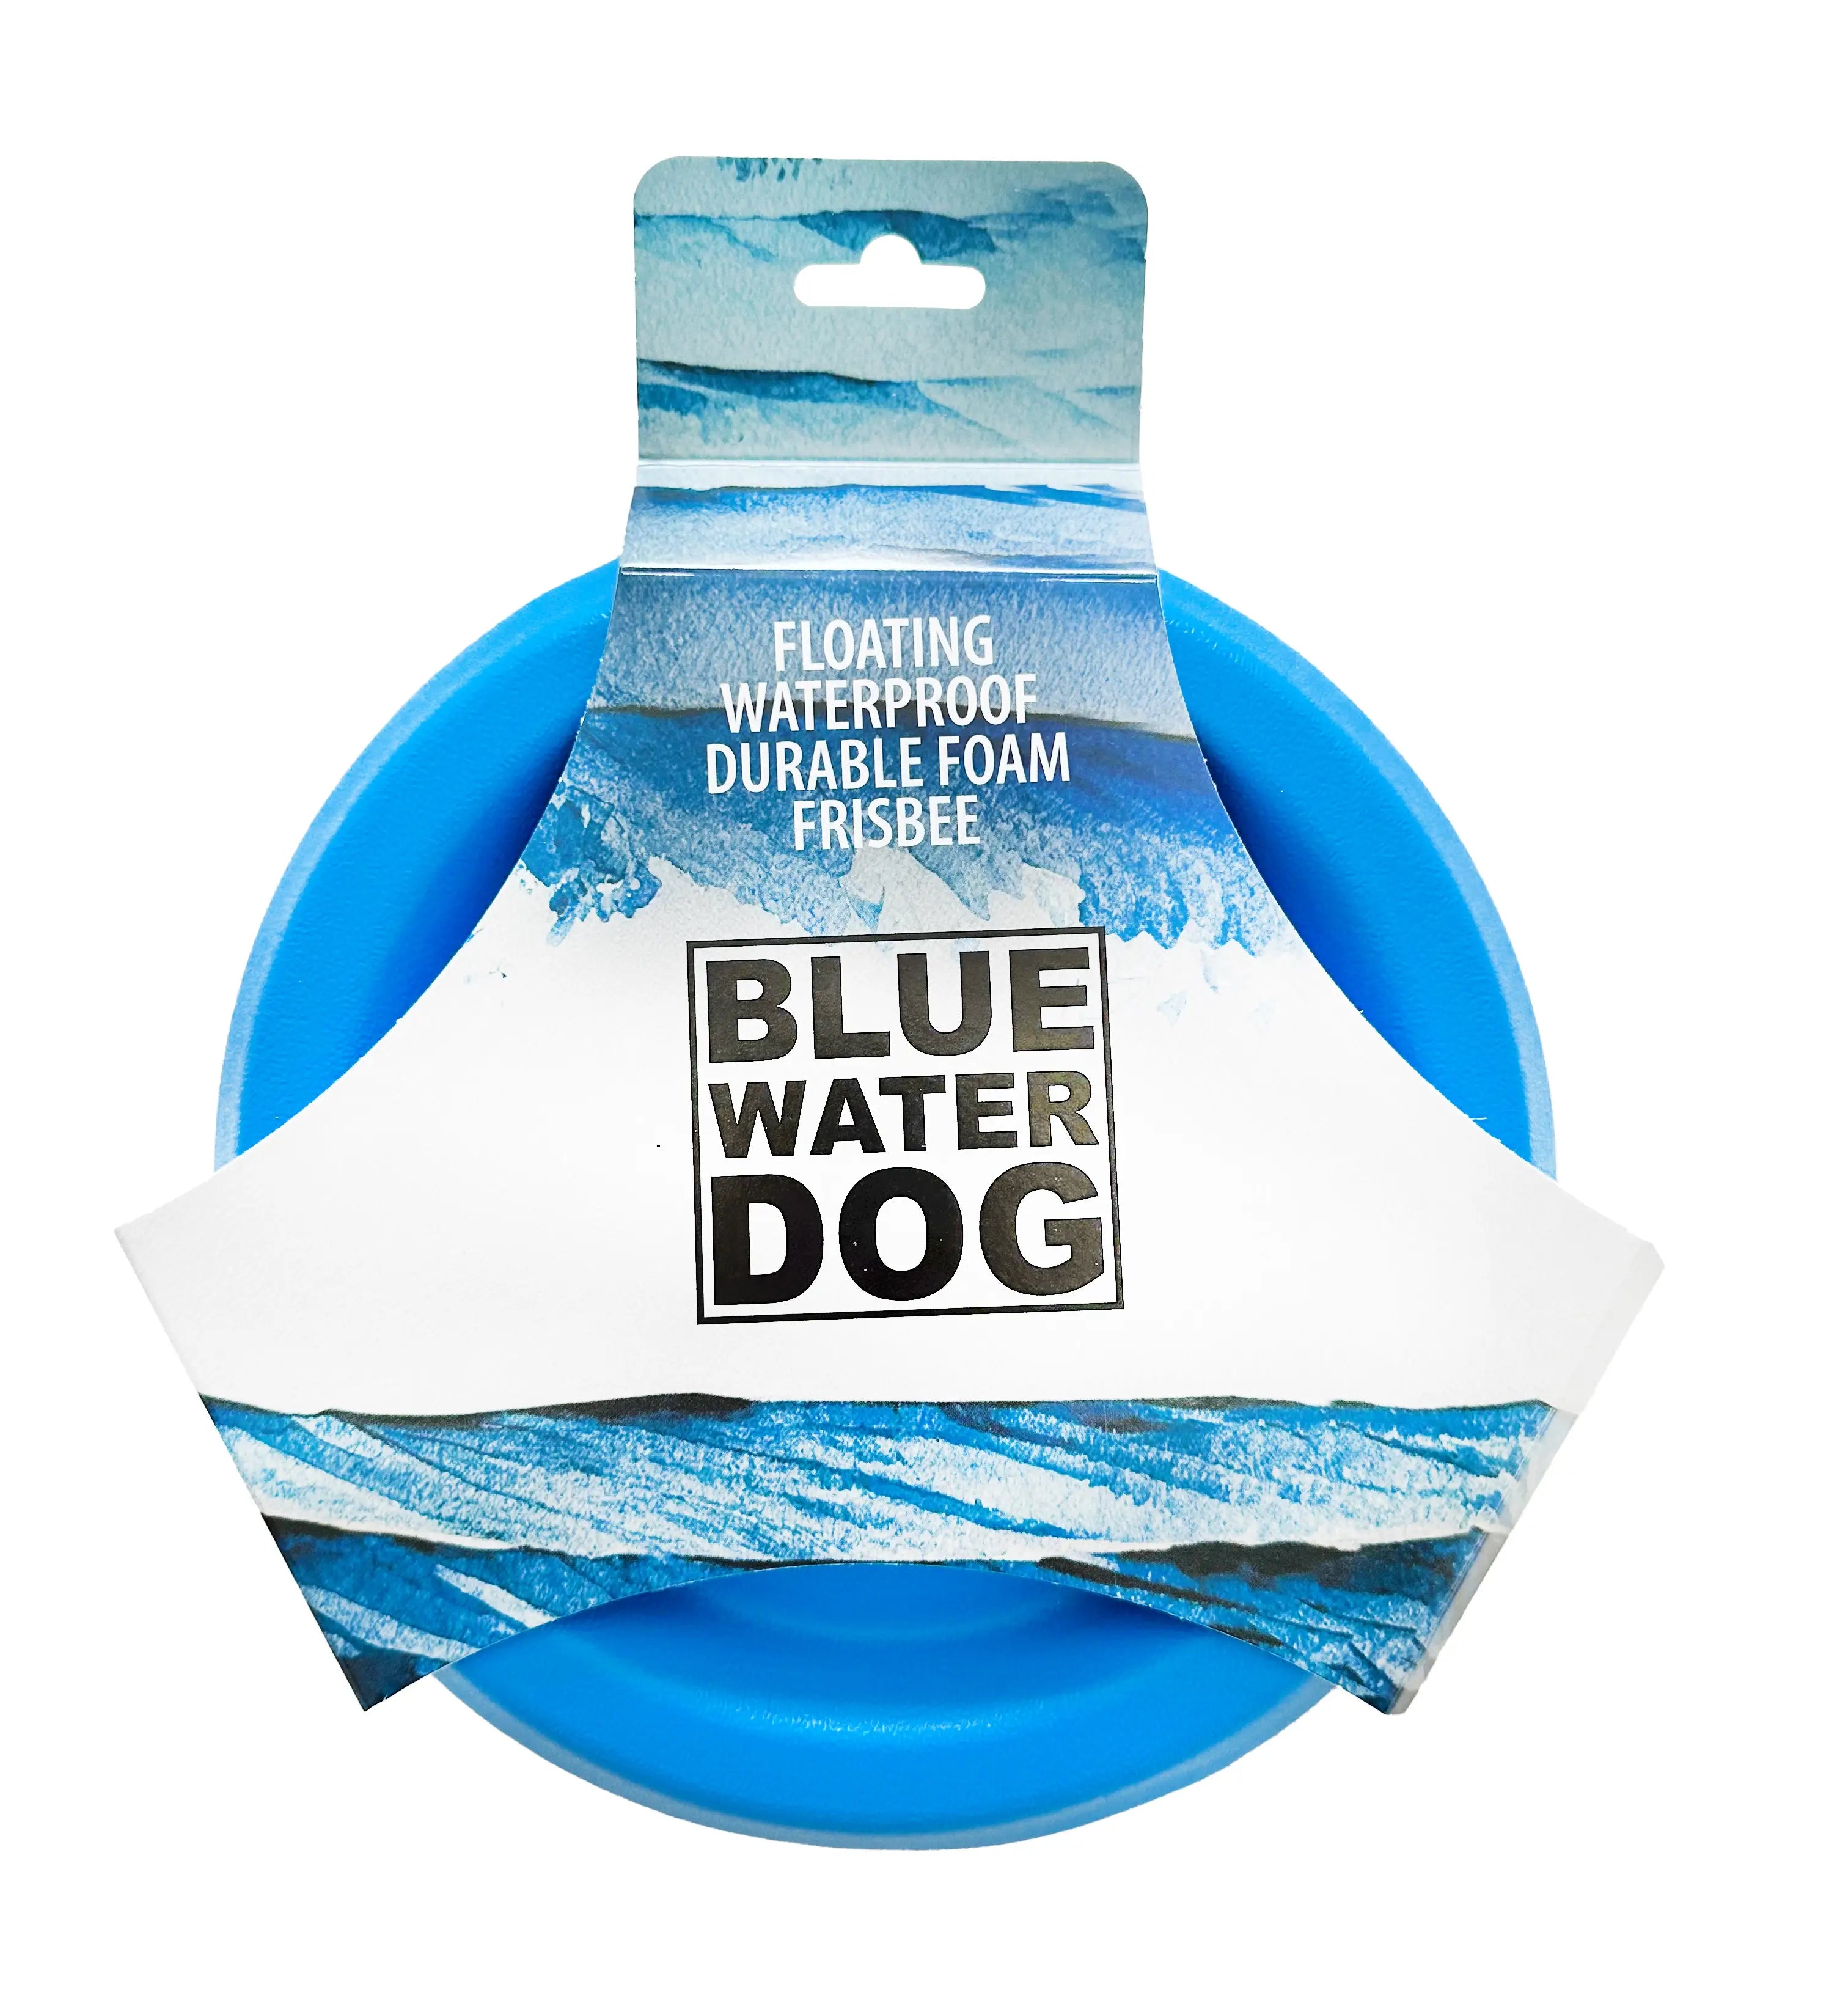 Blue dog frisbee in packaging.